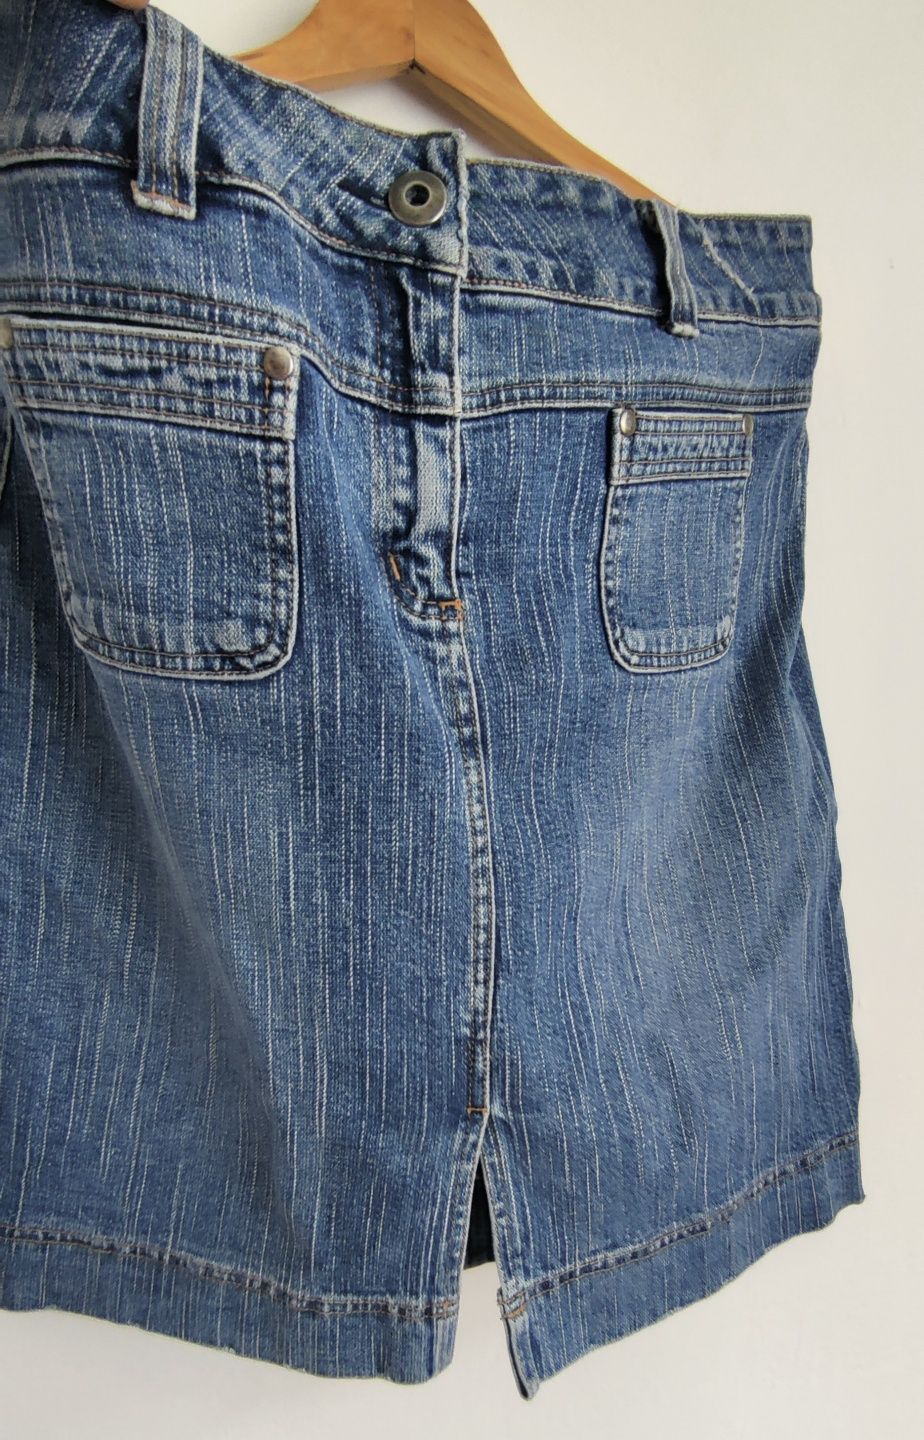 Spódnica dżinsowa krótka retro vintage 38 / M niebieska jeans dżins